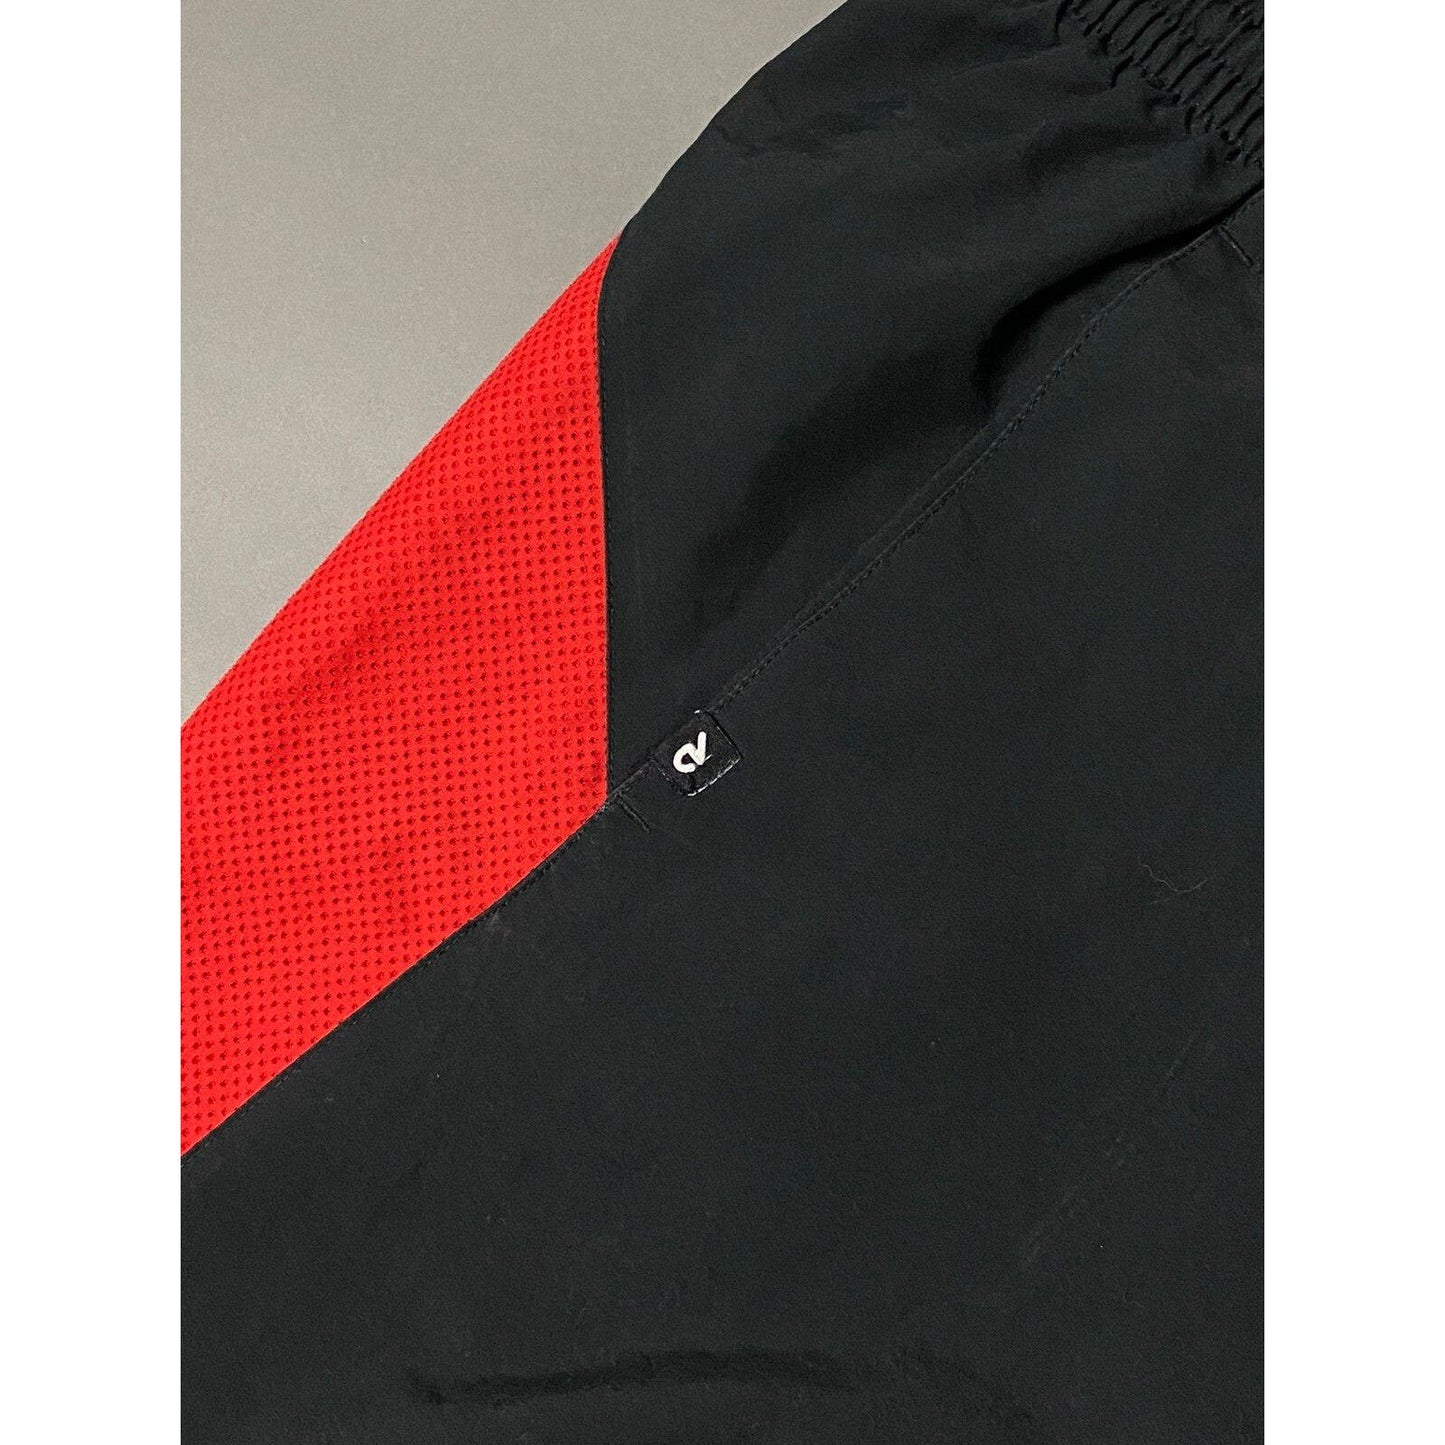 Arsenal Nike track suit vintage black white nylon set